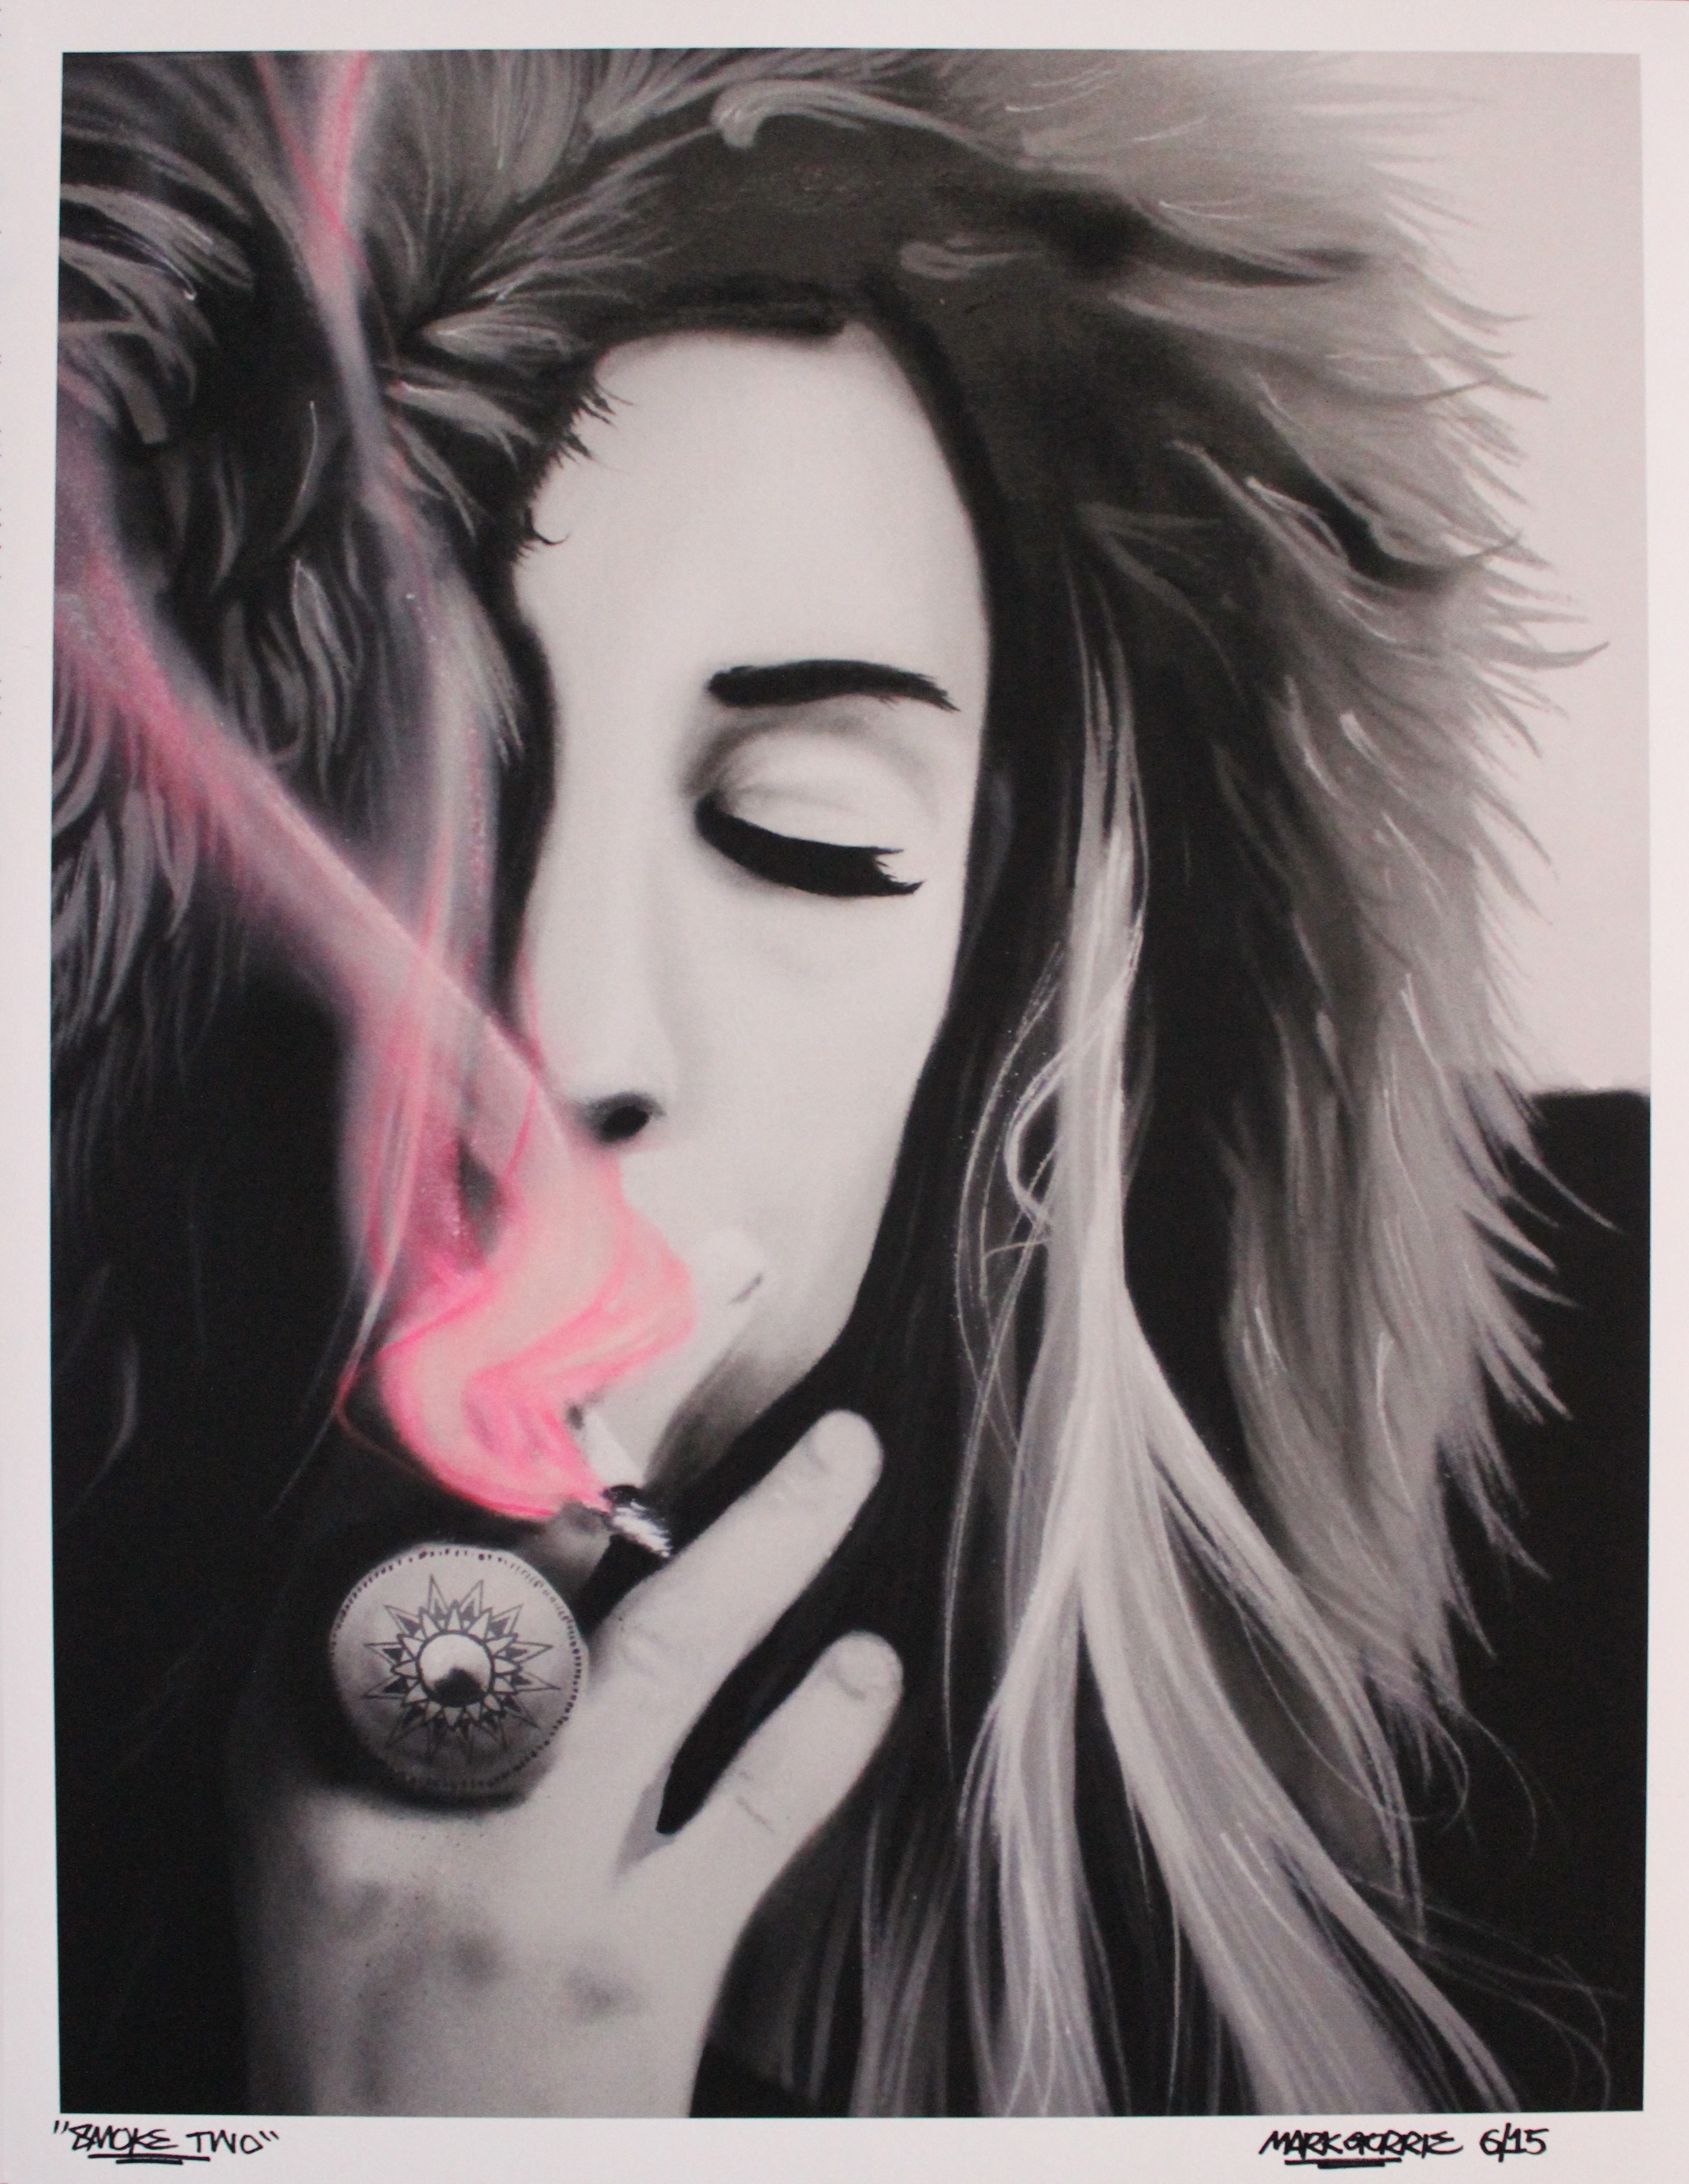 "SMOKE 2" by Mark Gorrie